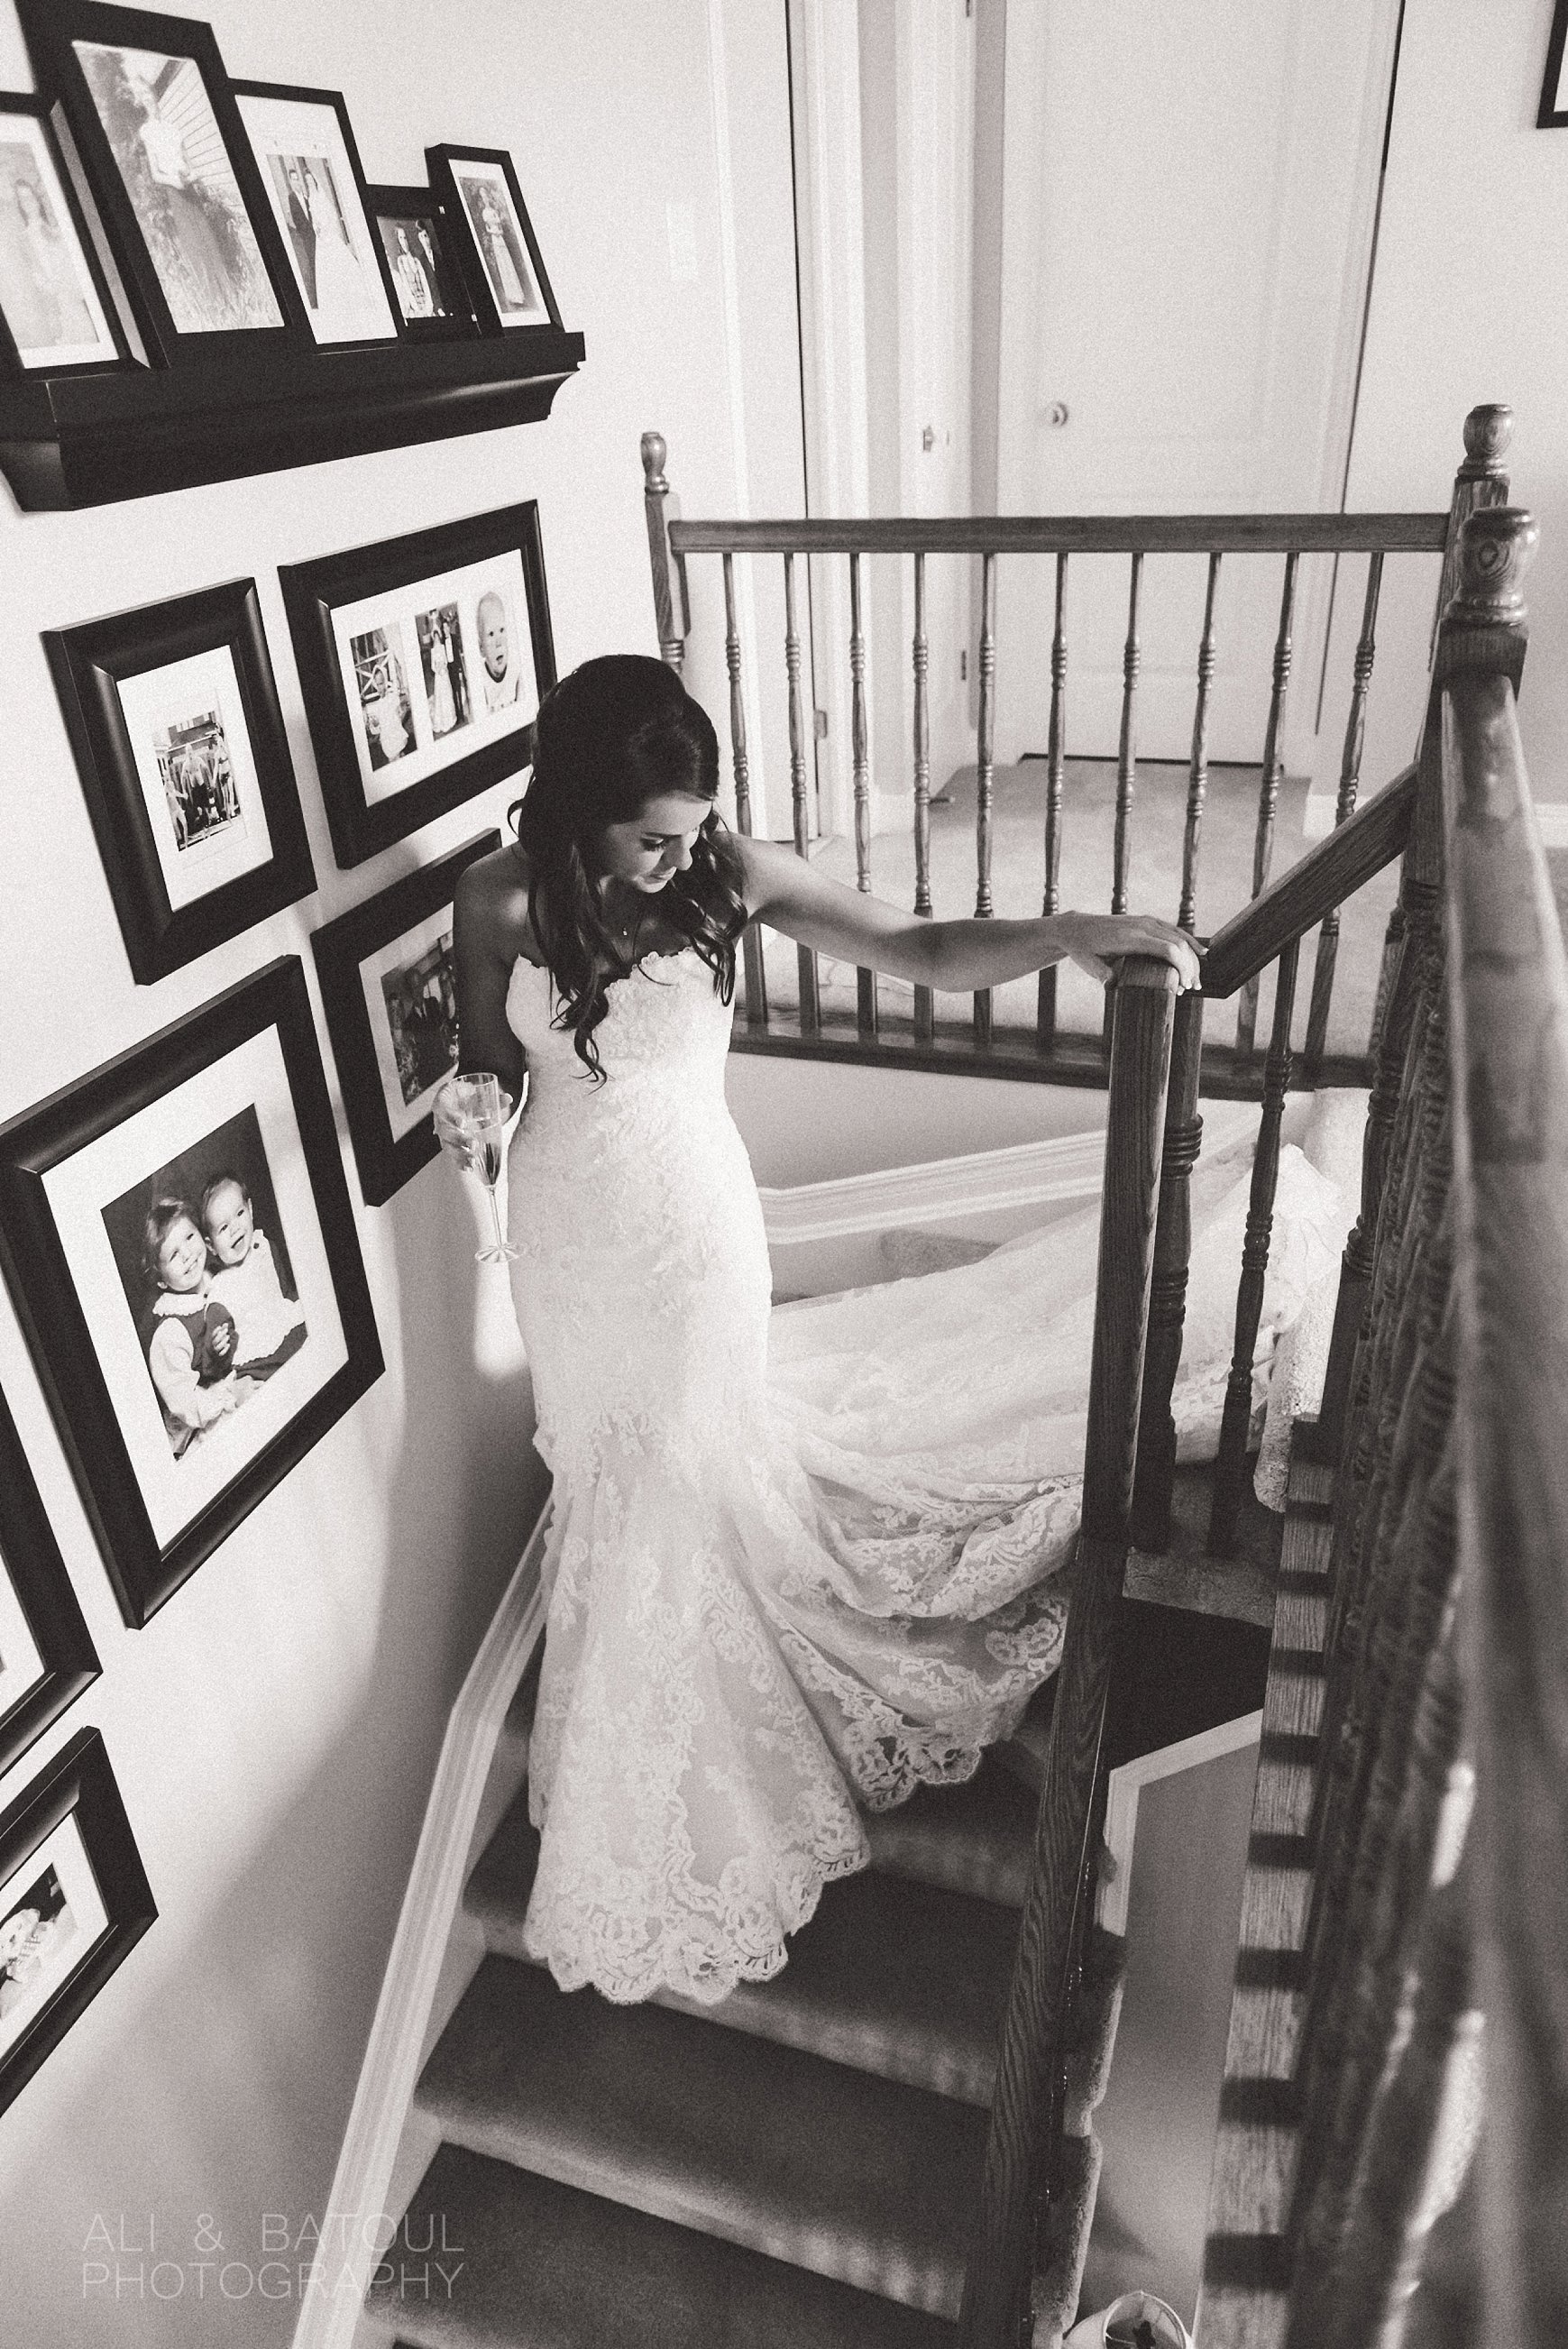 Ali & Batoul Photography - Documentary Fine Art Ottawa Wedding Photography_0012.jpg